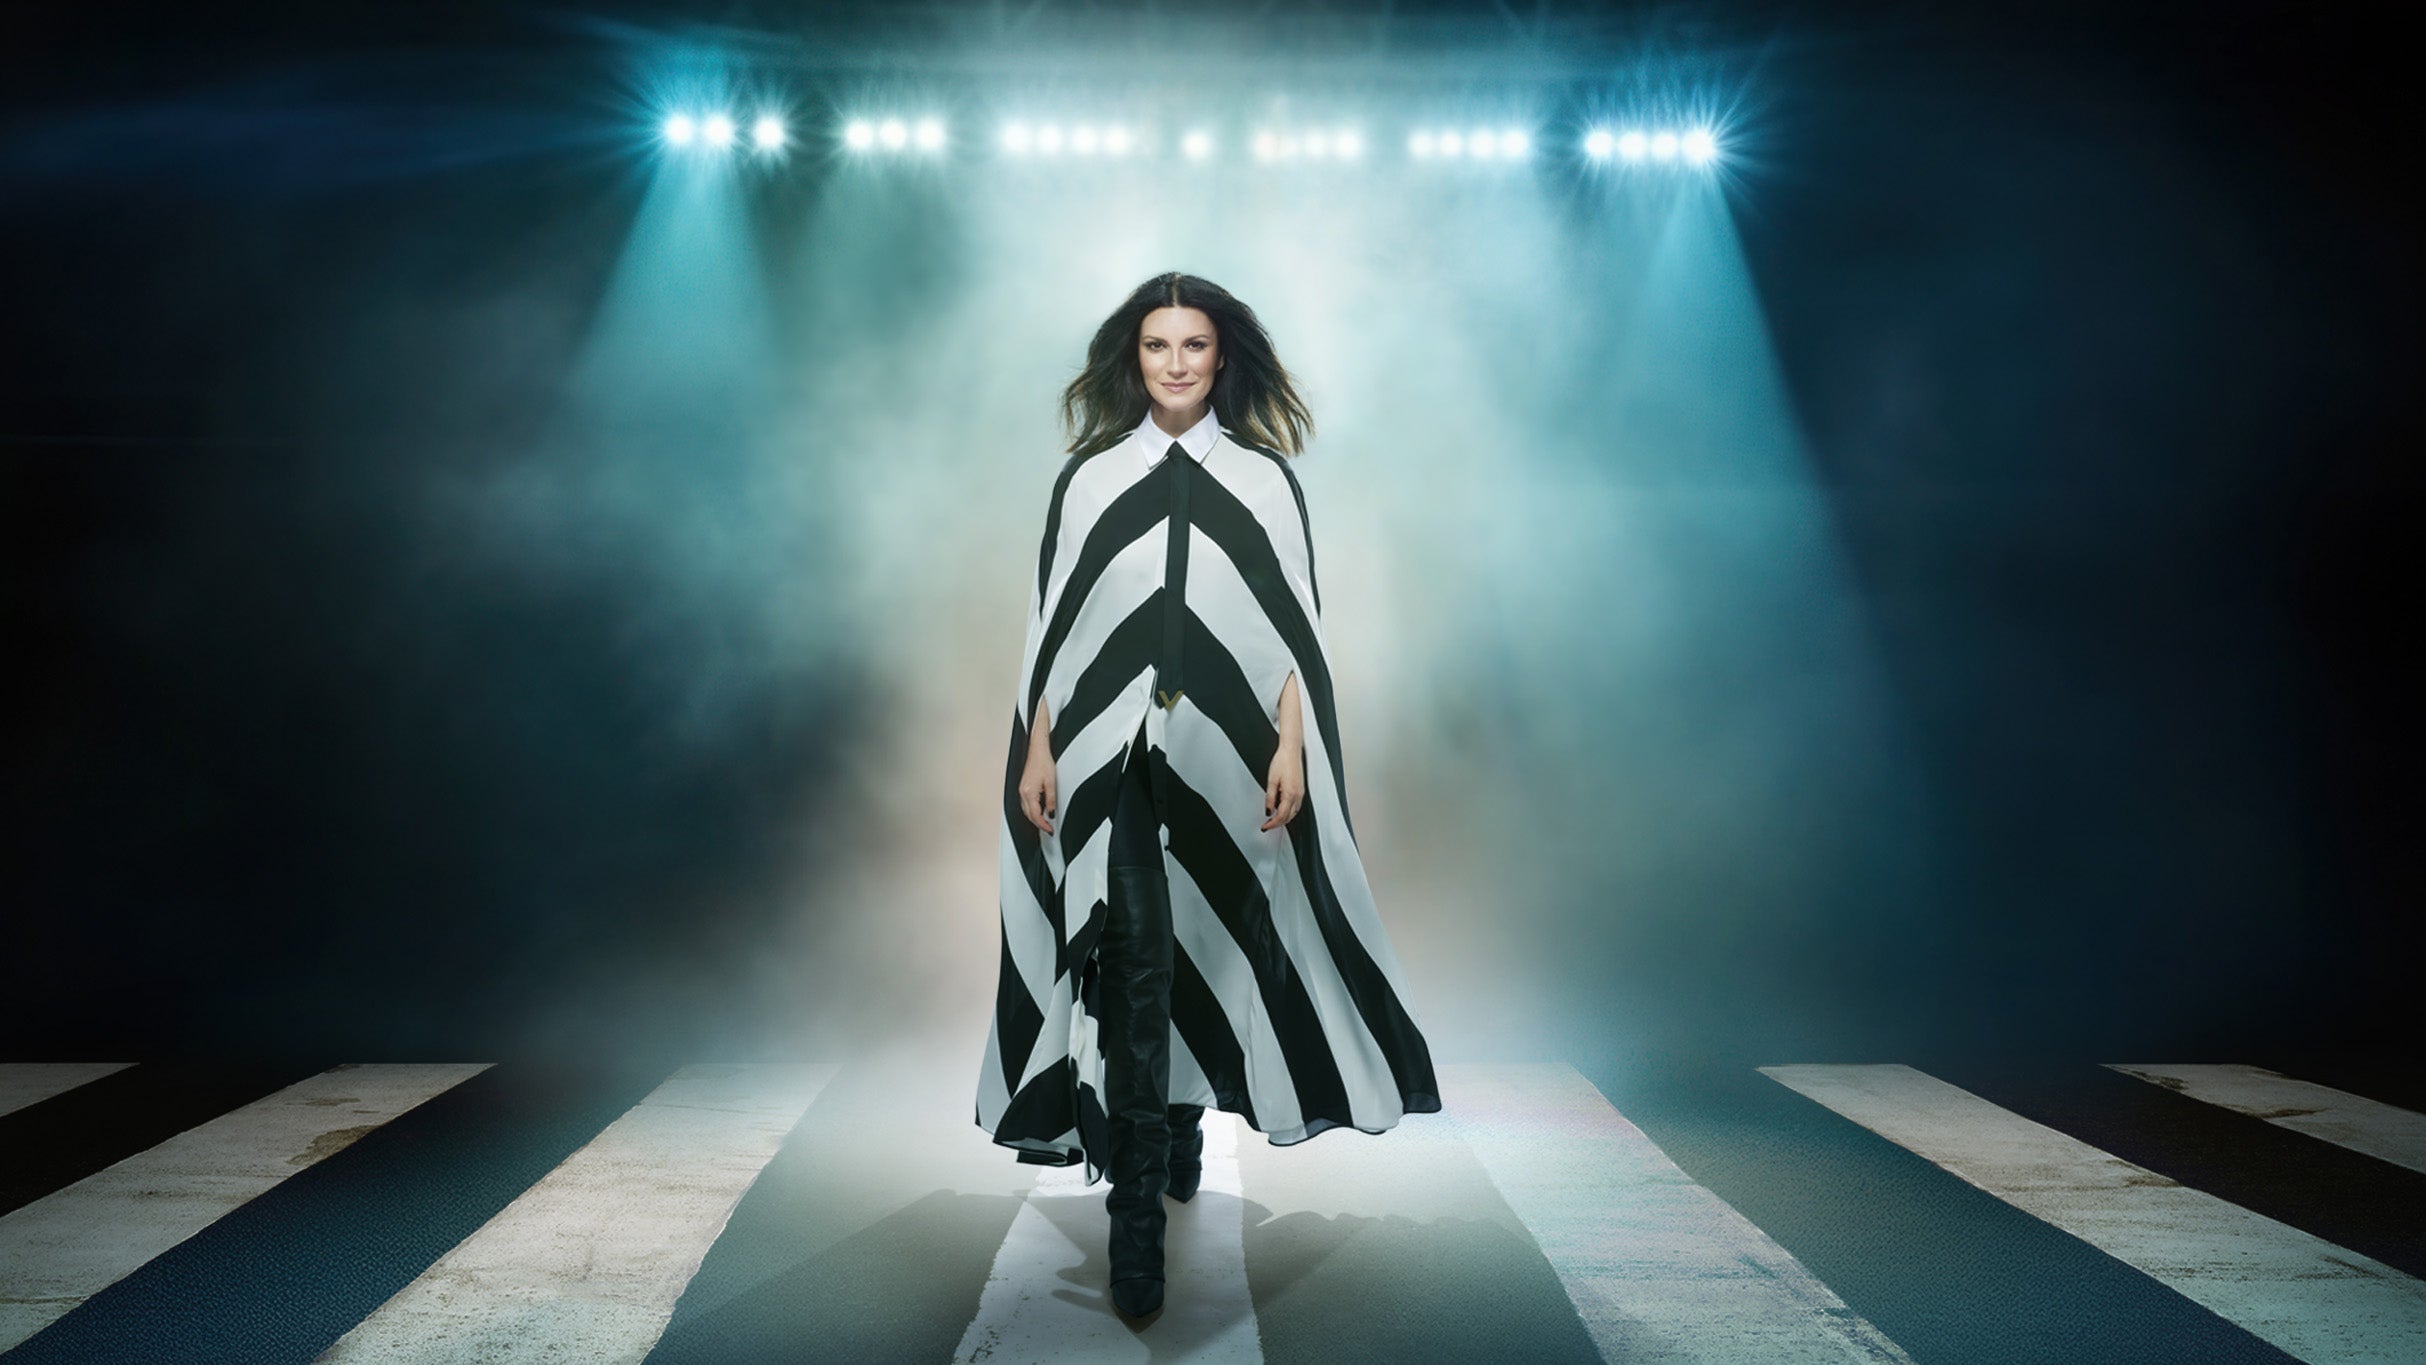 Laura Pausini - World Tour 2023/2024 in New York promo photo for Ticketmaster presale offer code